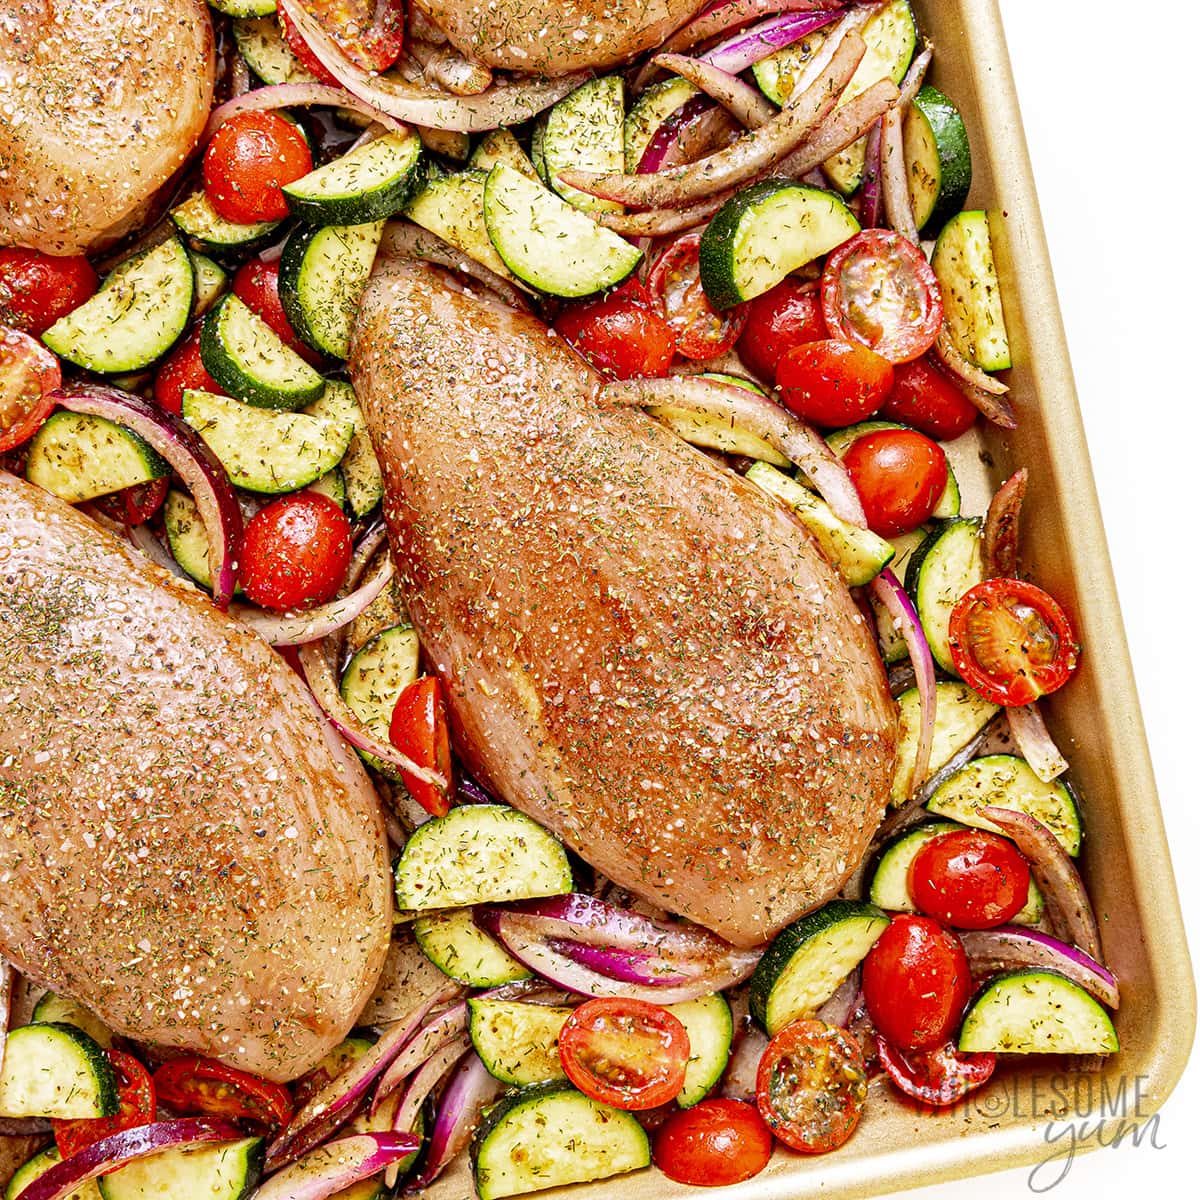 Chicken seasoned and placed between veggies on sheet pan.